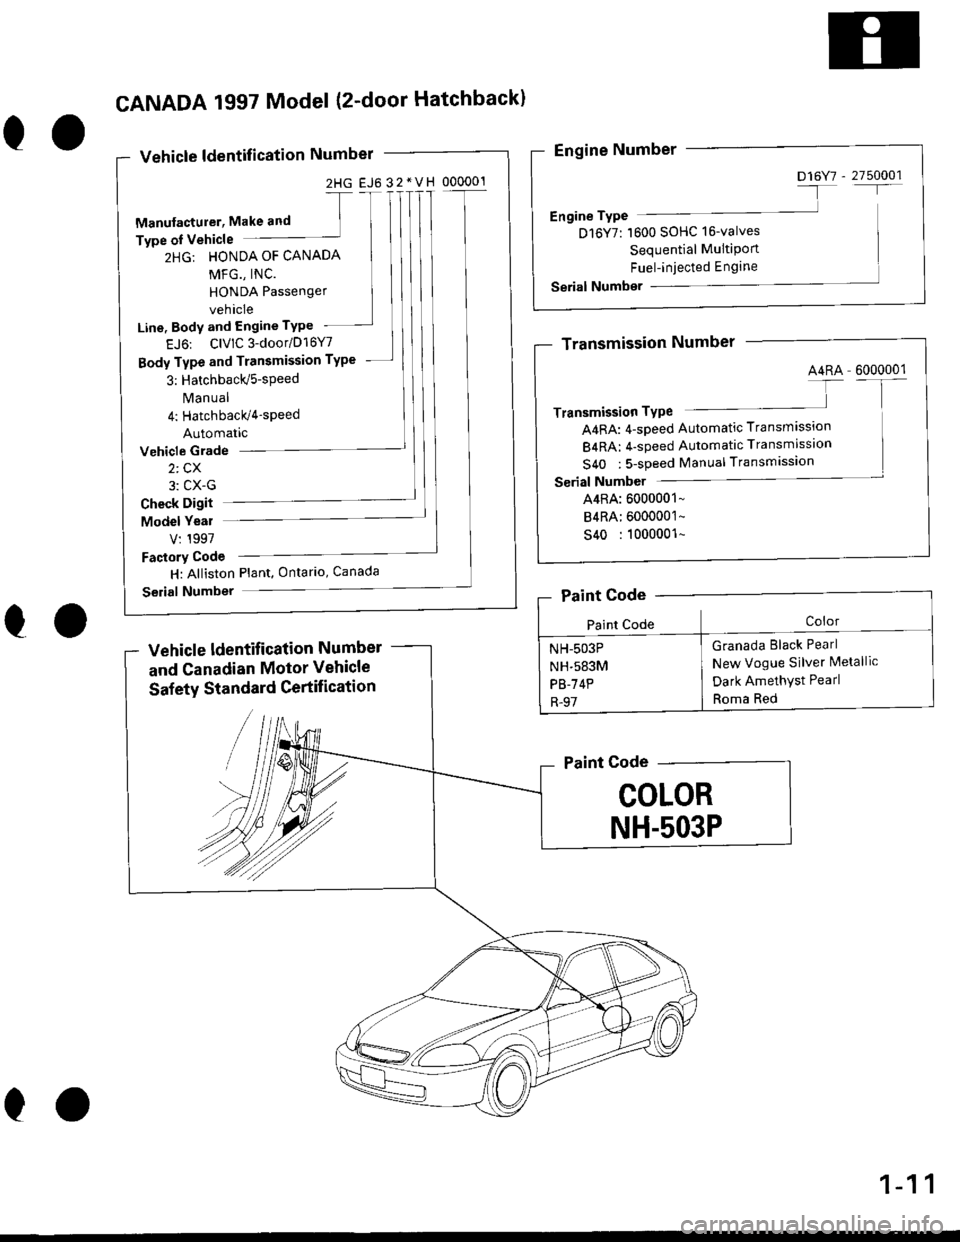 HONDA CIVIC 1998 6.G User Guide 2HG EJ6 32*VH 000001
eo
CANADA 1997 Model (2-door Hatchbackl
Vehicle ldentification Number
-[
Manufacturer, Make and ]Type oI Vehicle
2HG: HONDA OF CANADA
MFG., INC.
HONDA Passenger
vehicle
Line, Body